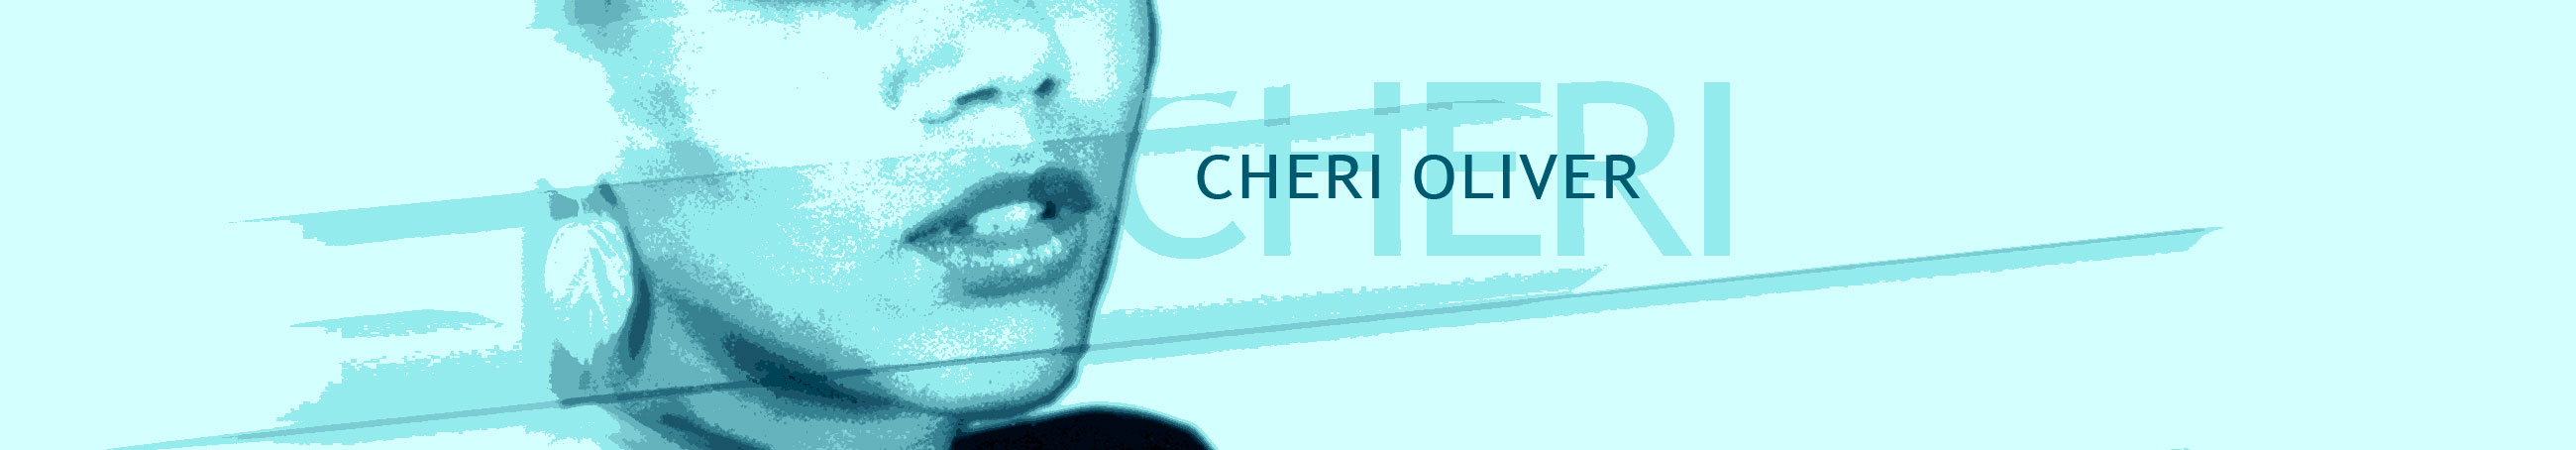 Cheri Oliver